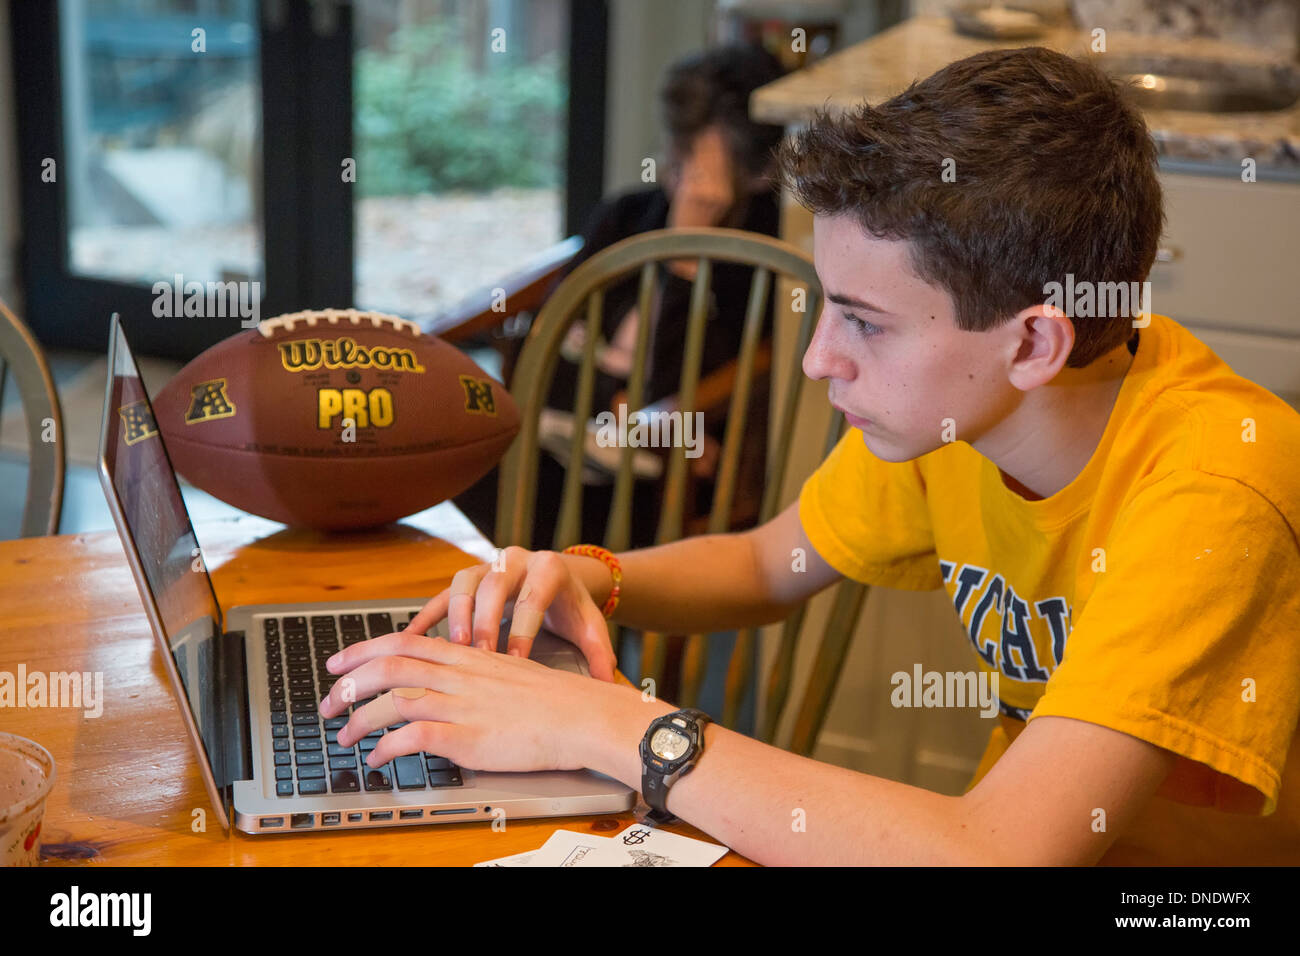 Washington, DC - High-School-Neuling Joey West, 15, arbeitet an seinem Laptop. Stockfoto